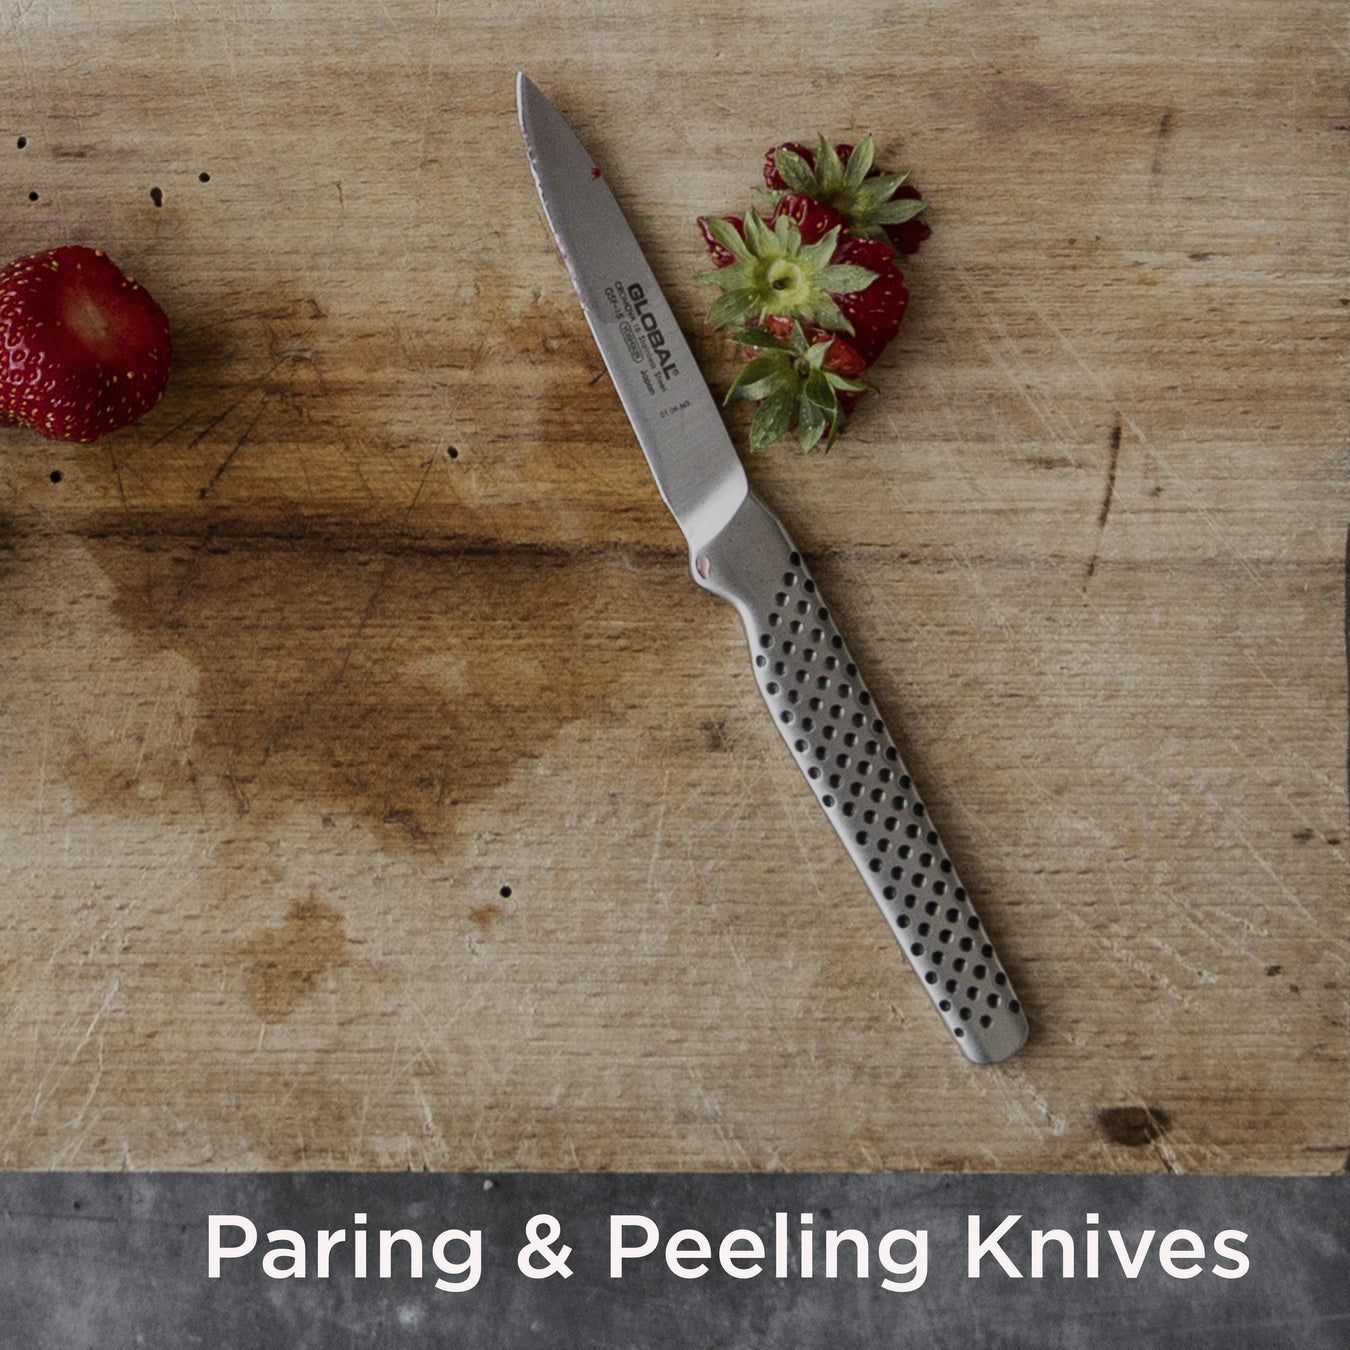 Global Paring & Peeling Knives